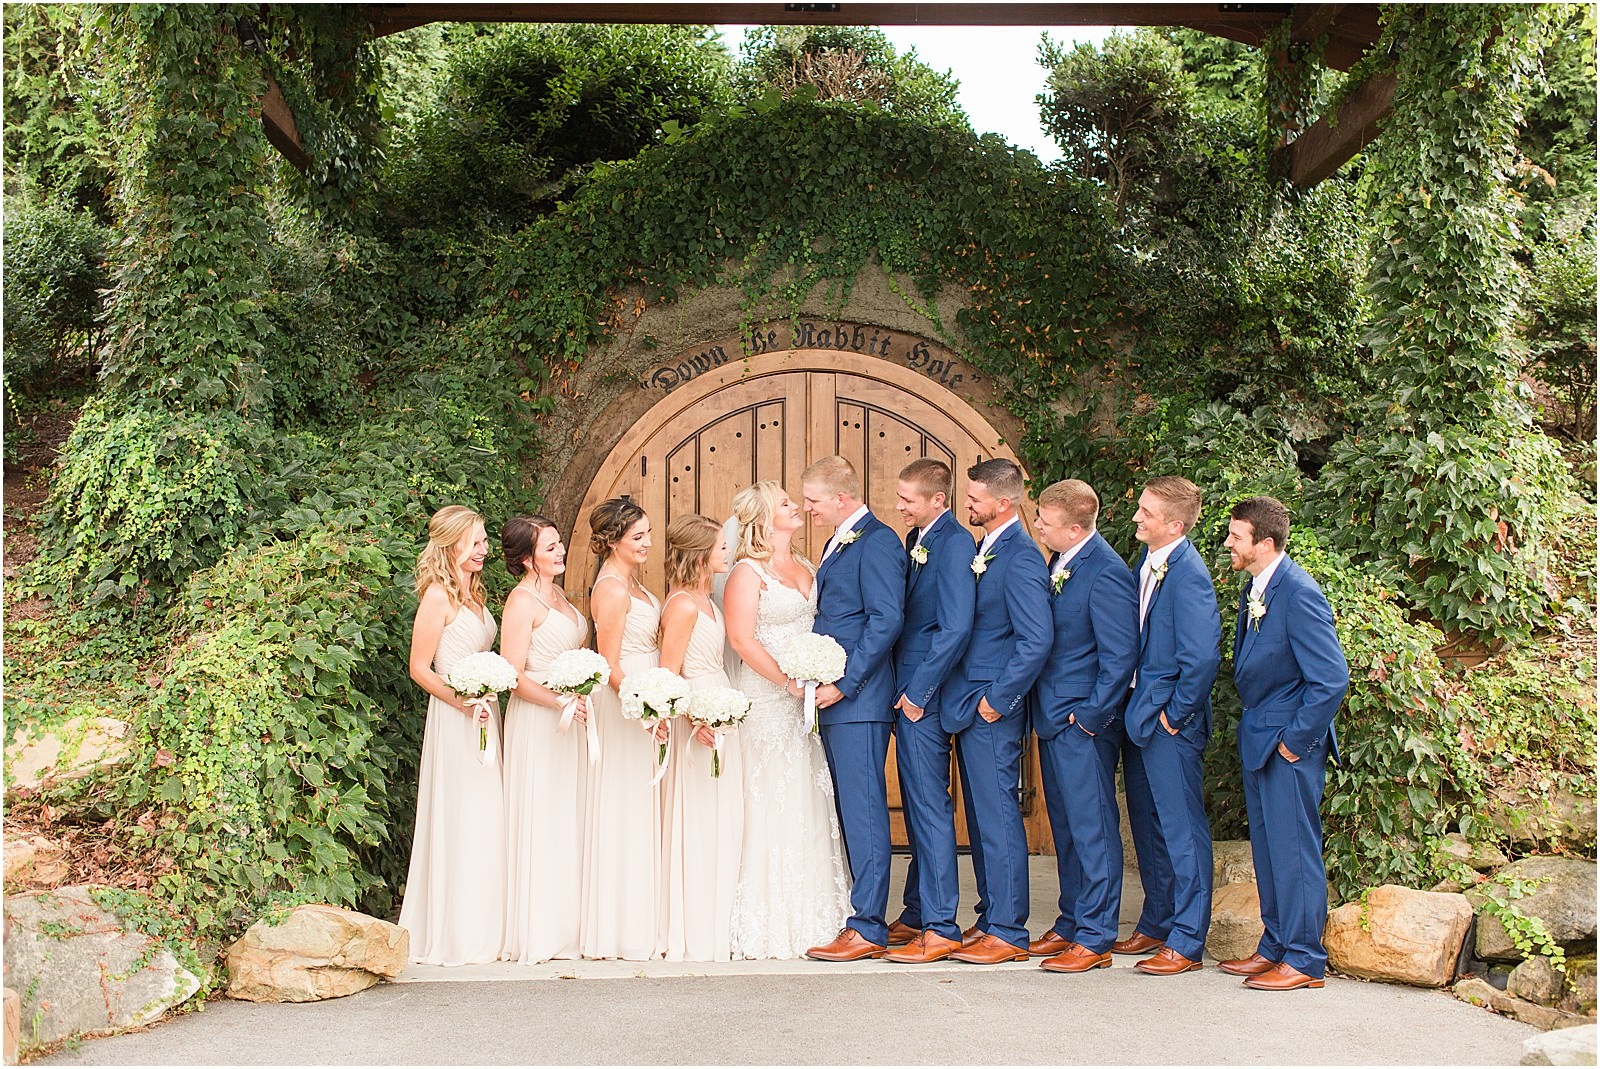 Kelsey and Caleb | Walkers Bluff Winery Wedding | Bret and Brandie Photography059.jpg